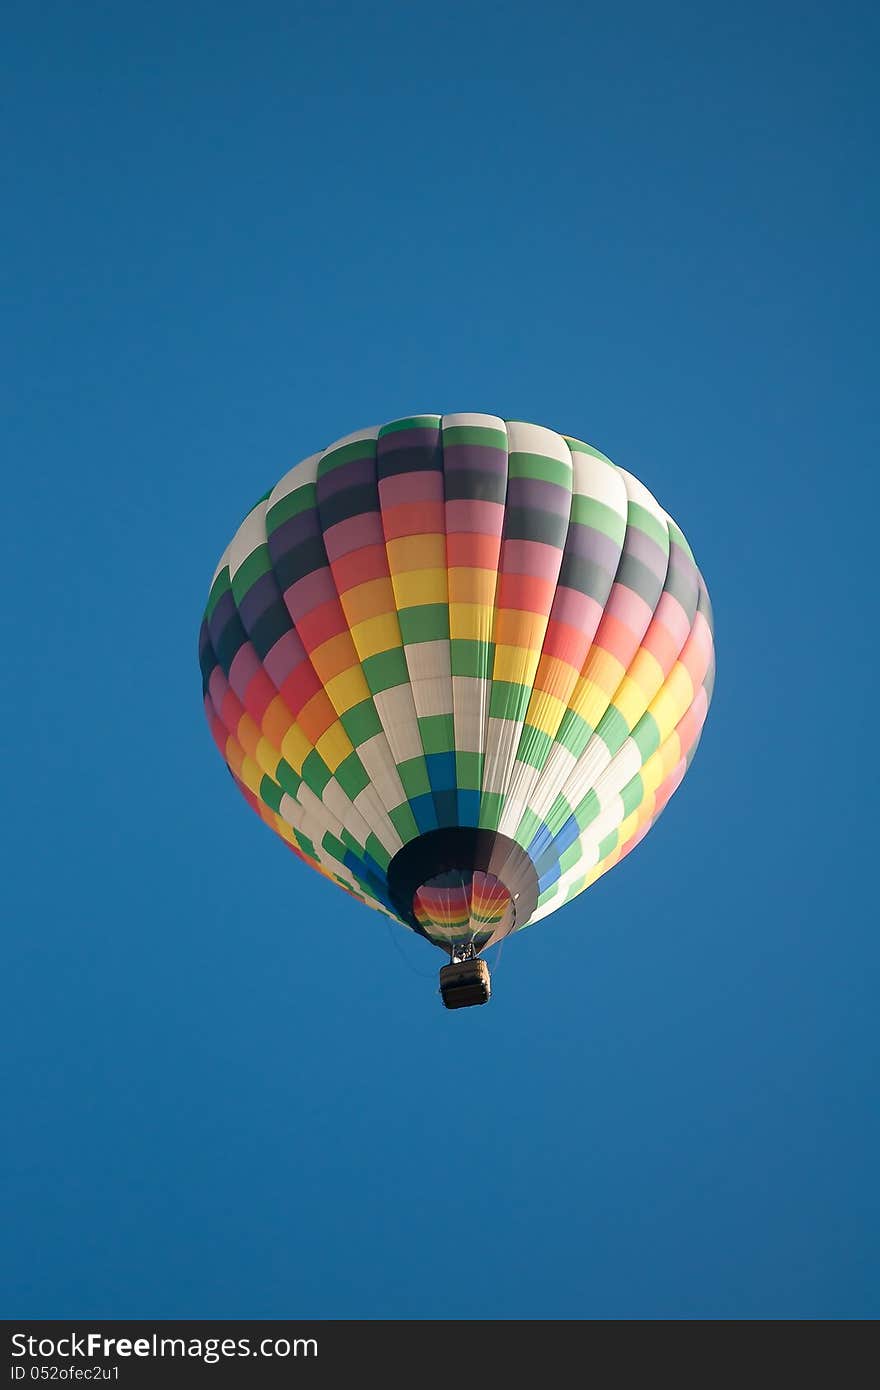 Hot air balloon over farm land with blue sky